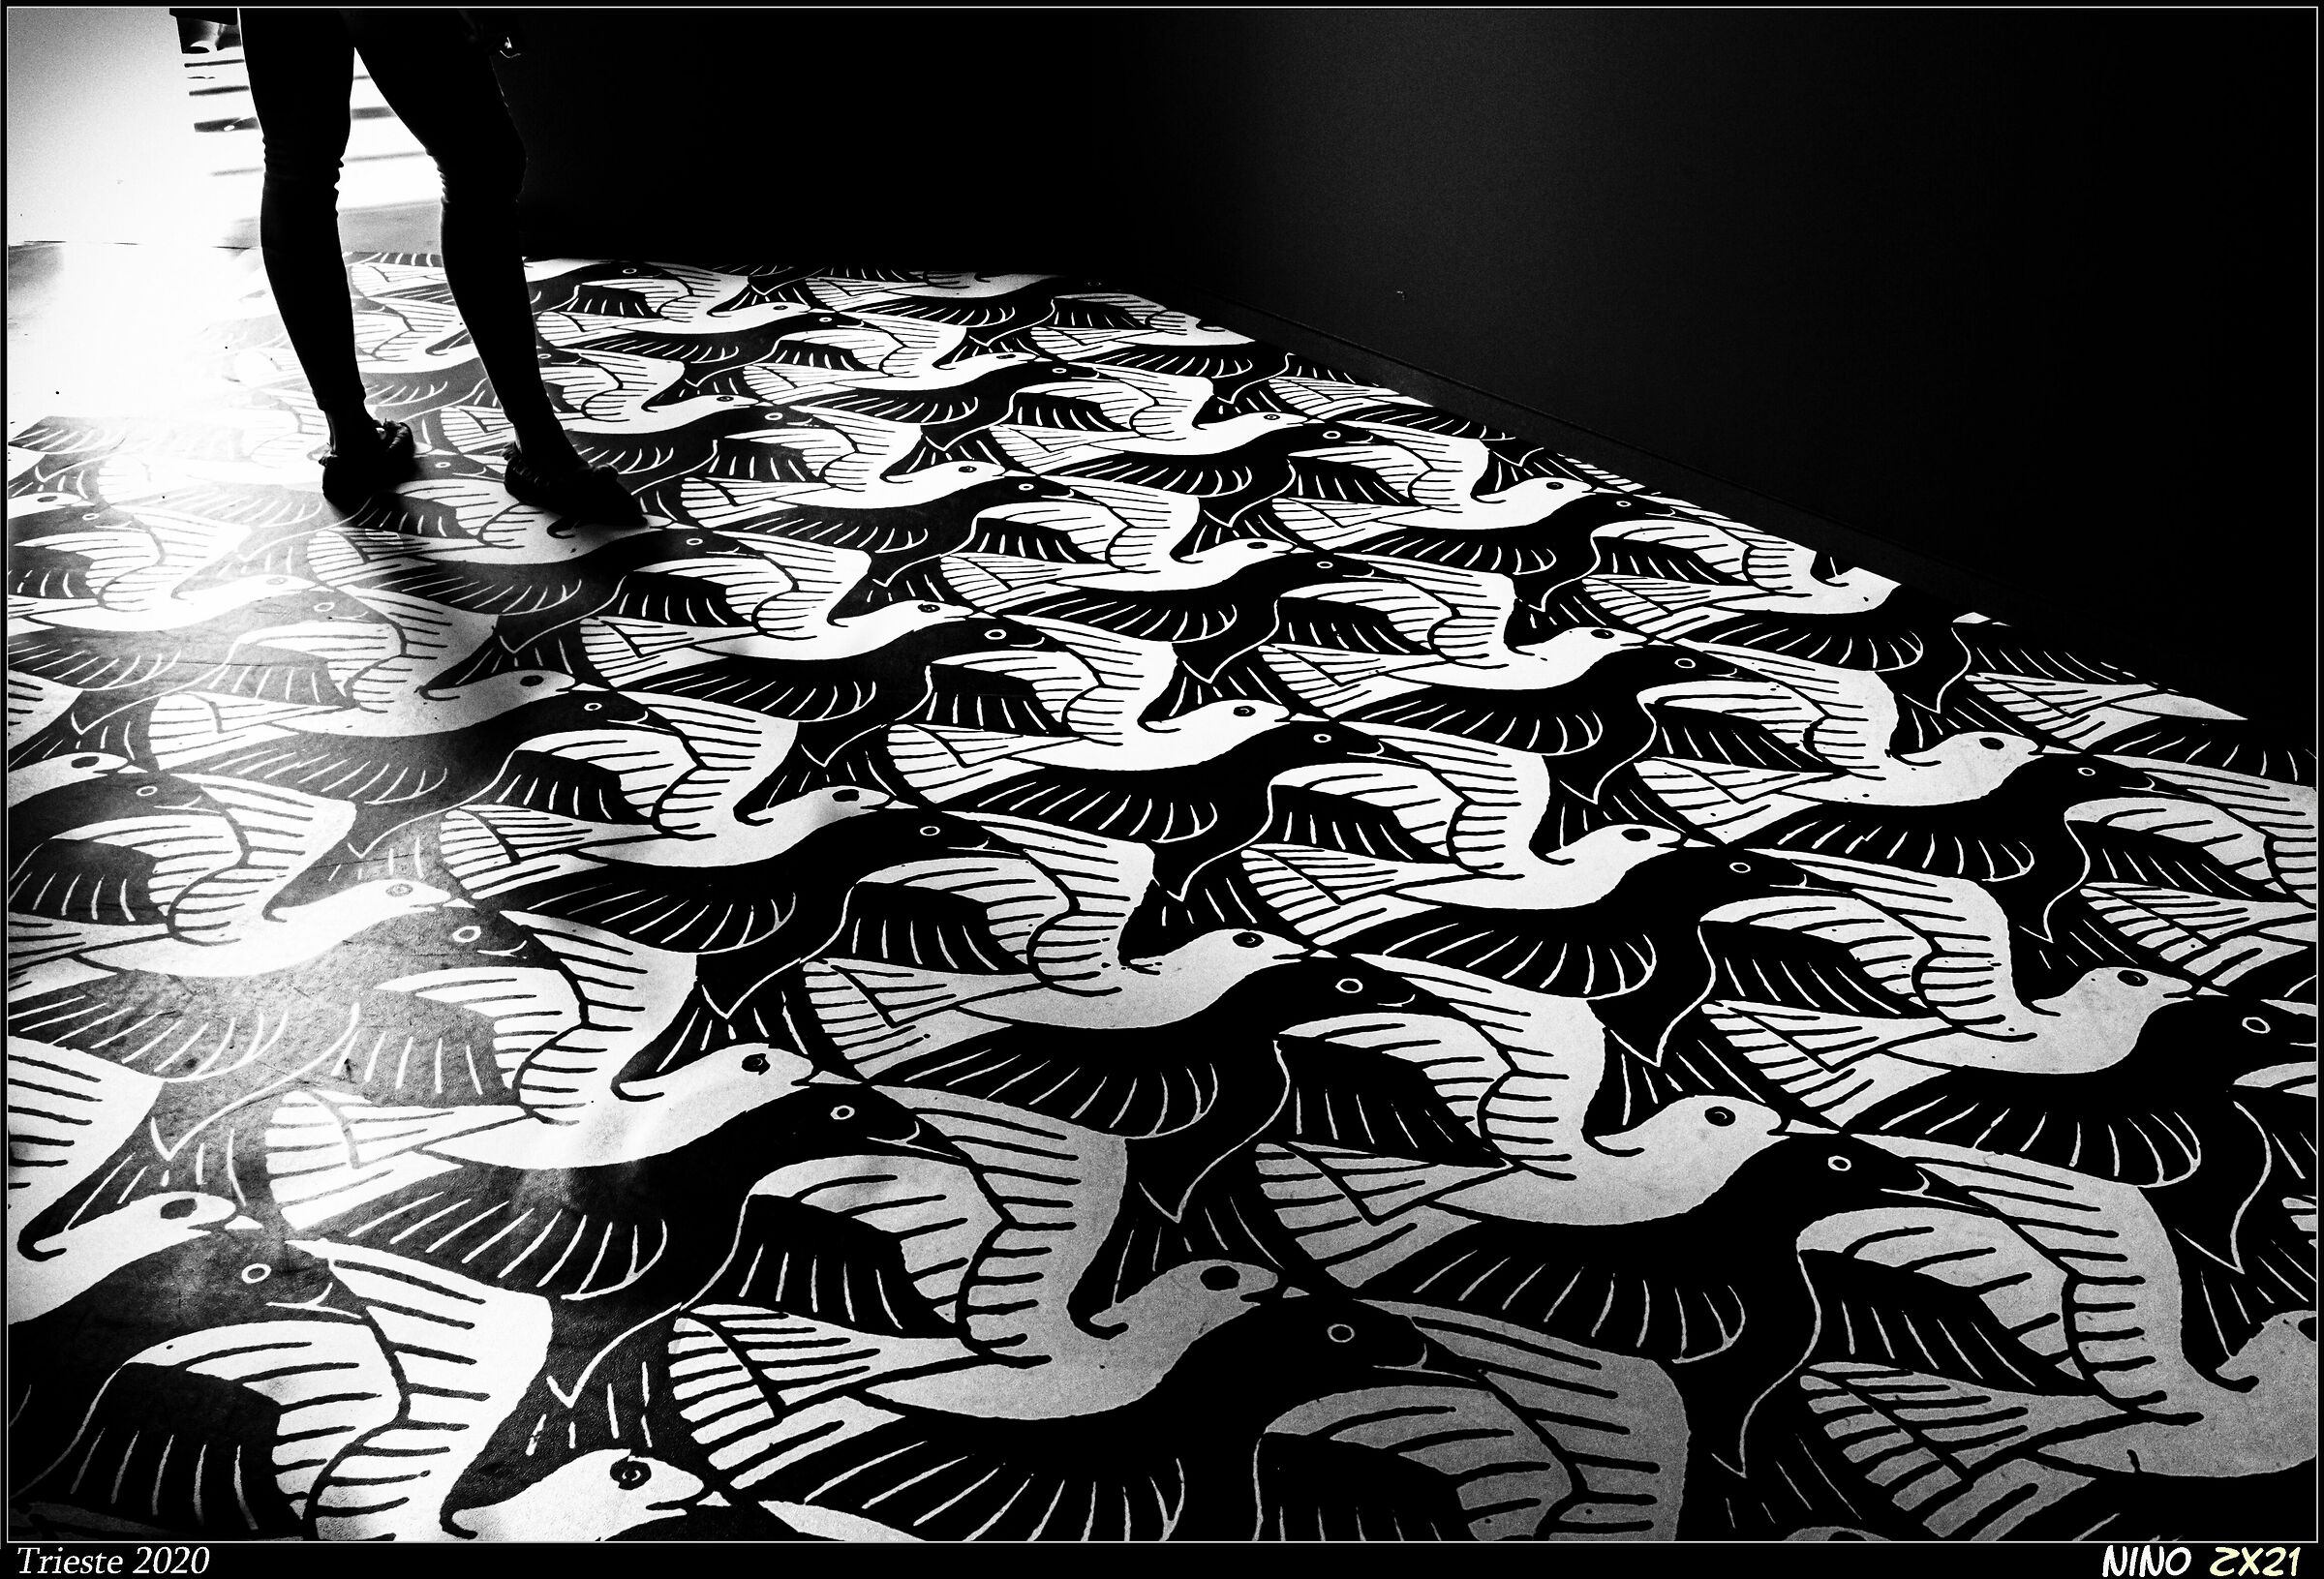 At the exhibition of Escher III...